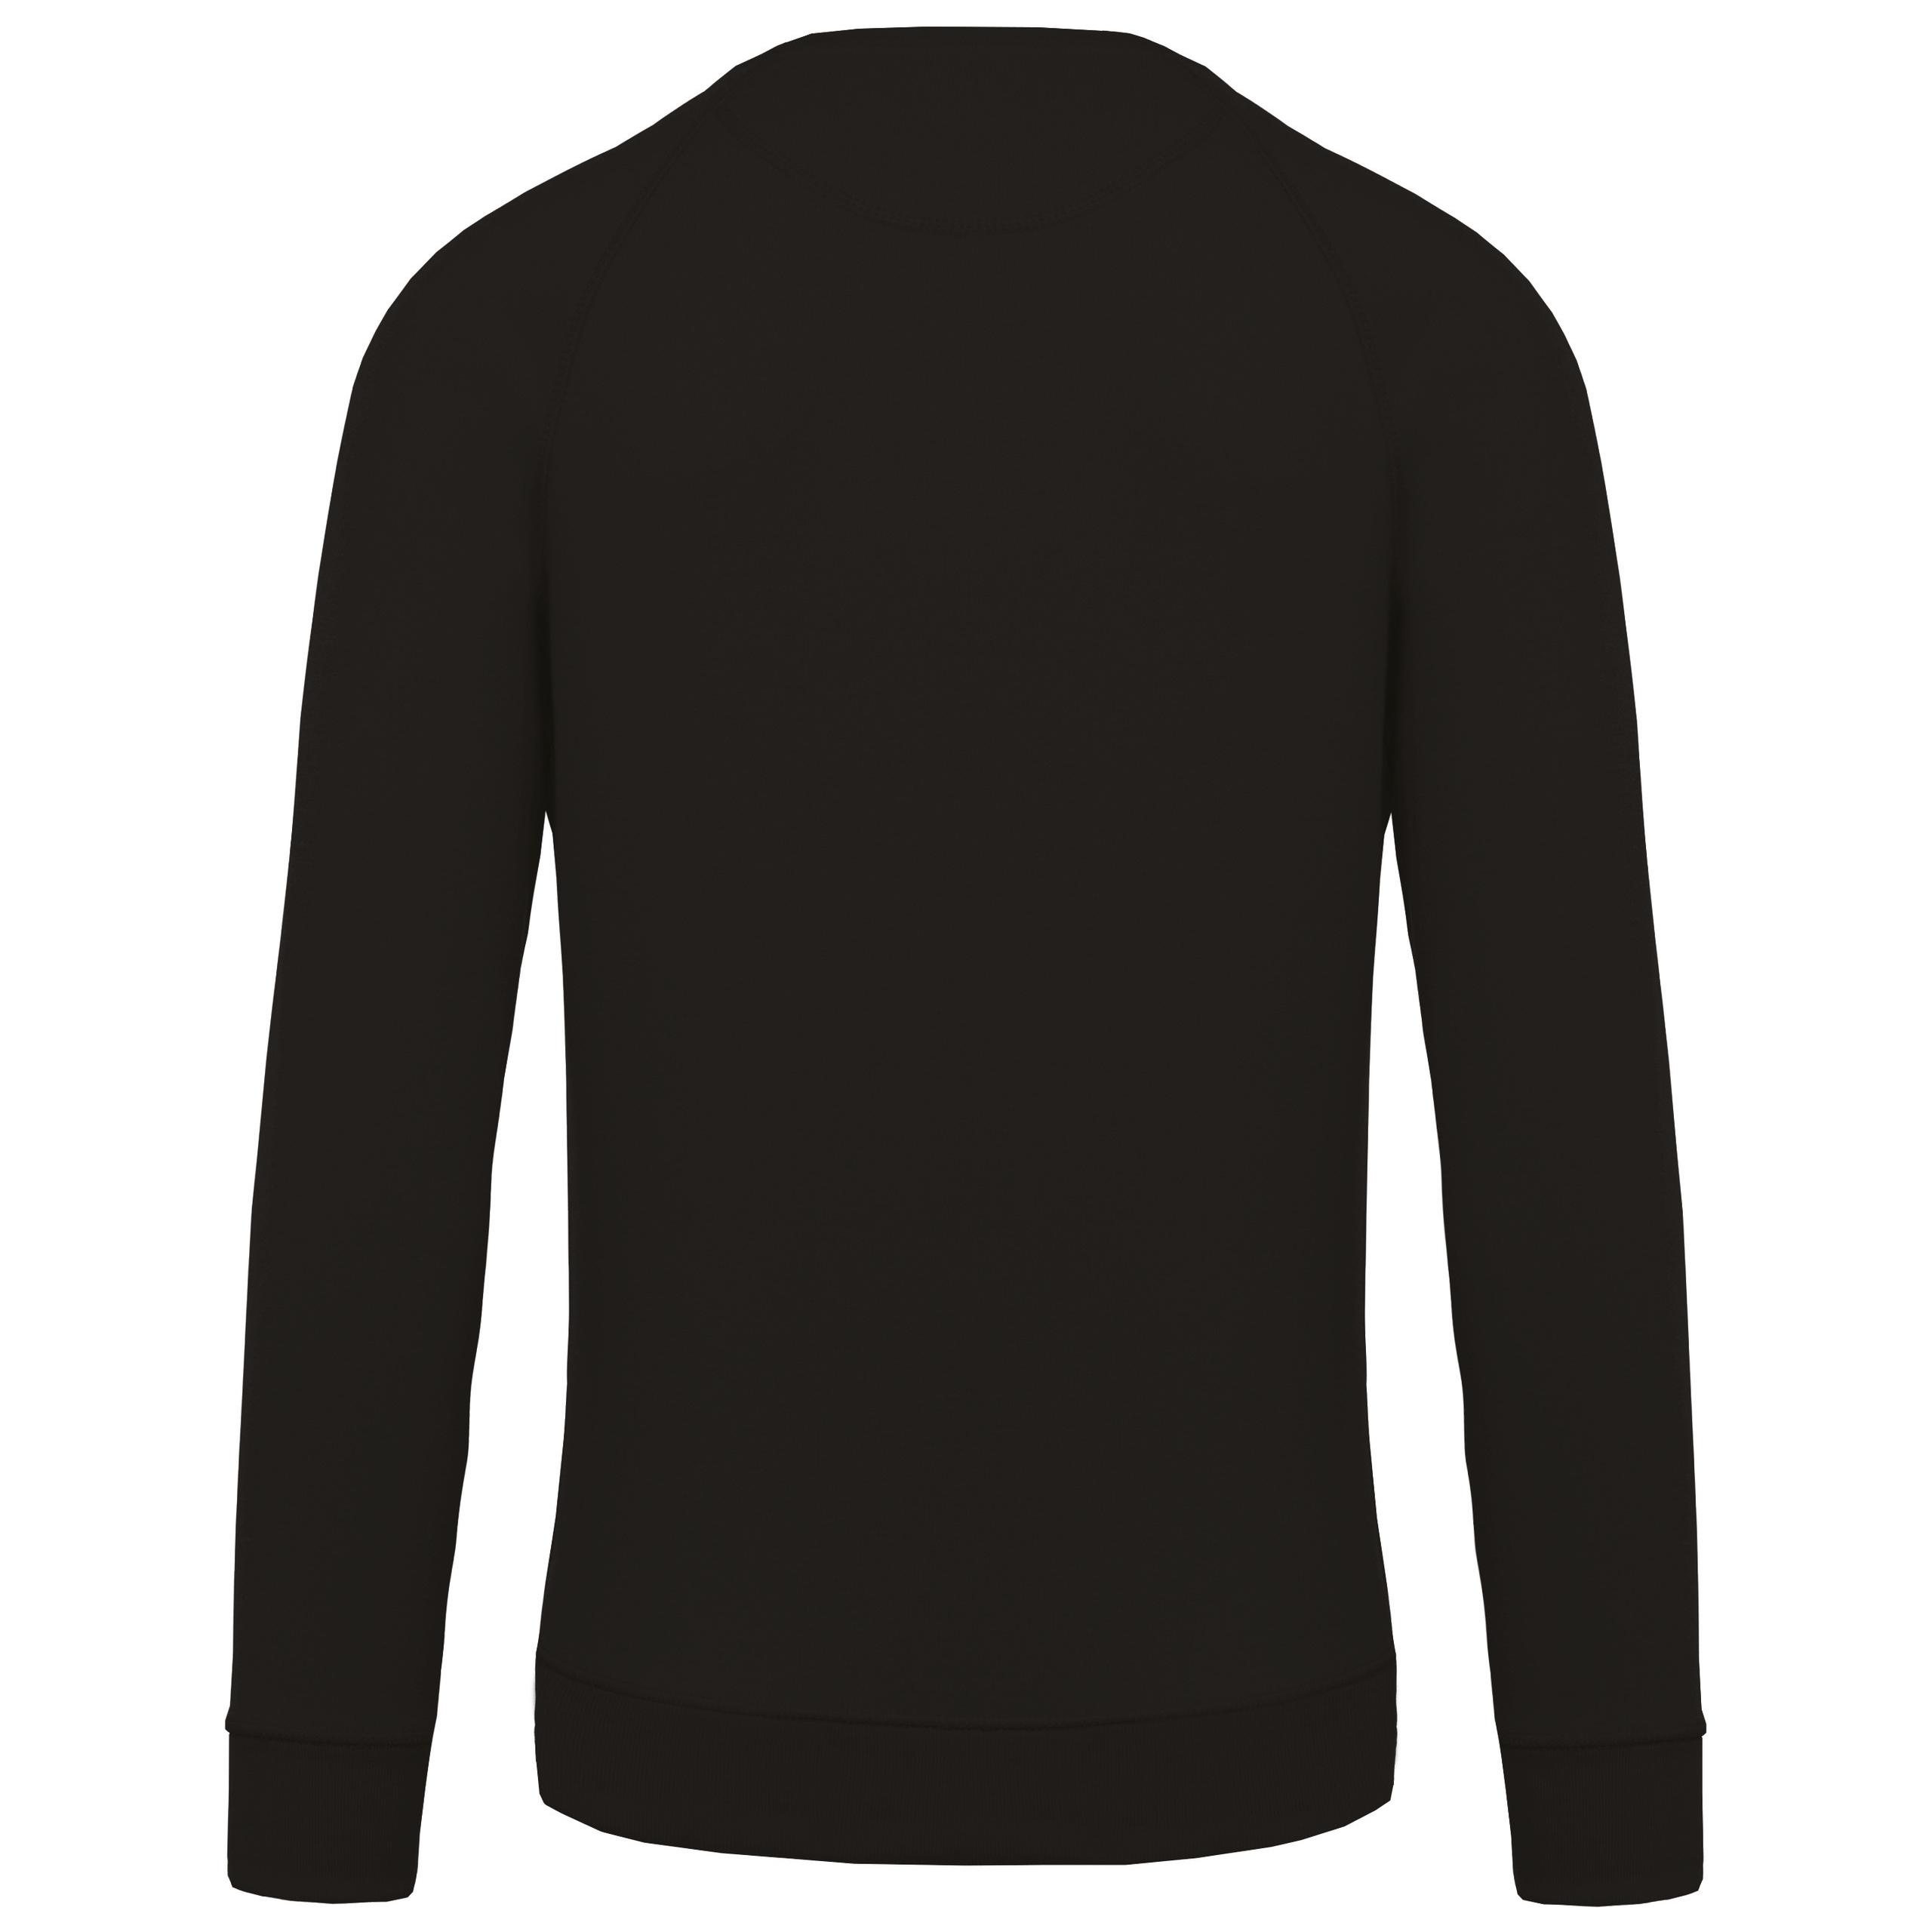 Kariban - Sweat-shirt Bio col rond manches raglan homme - Black - 3XL